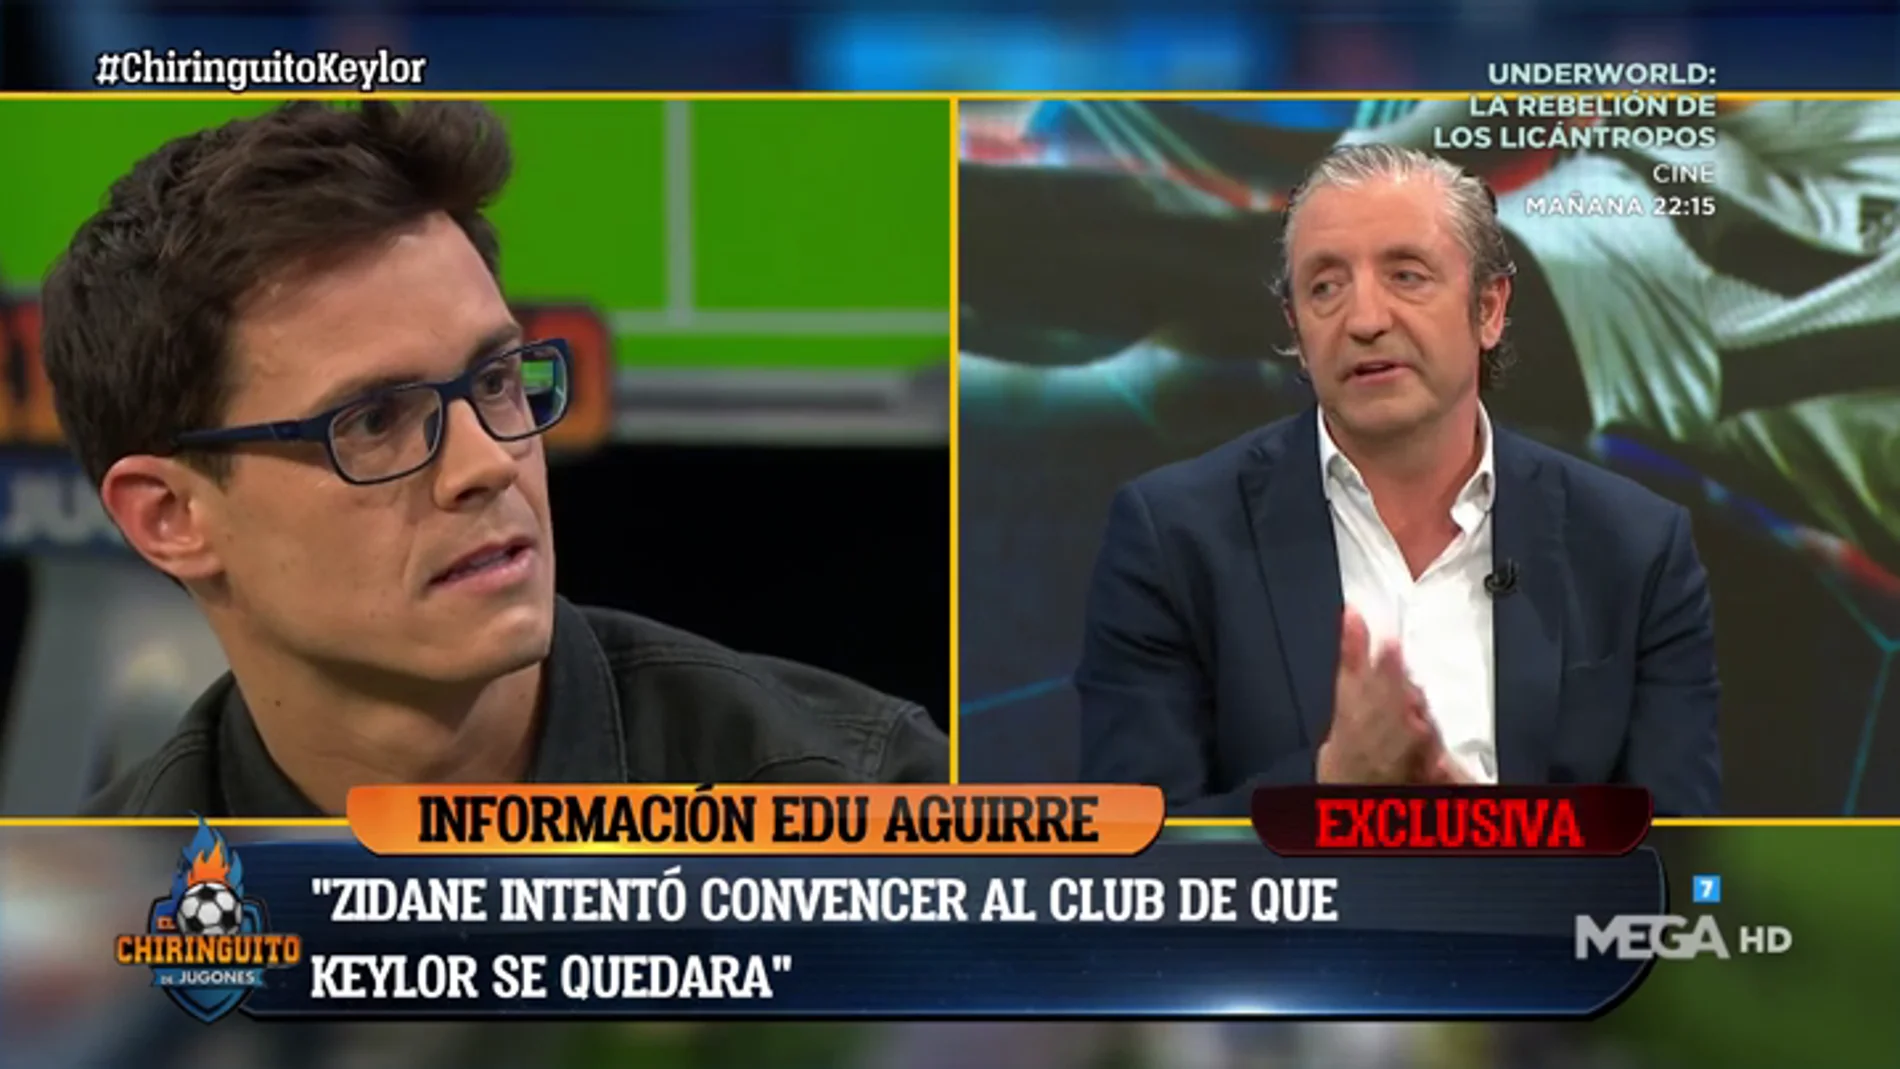 Edu Aguirre: "Zidane intentó convencer al club de que Keylor se quedara"